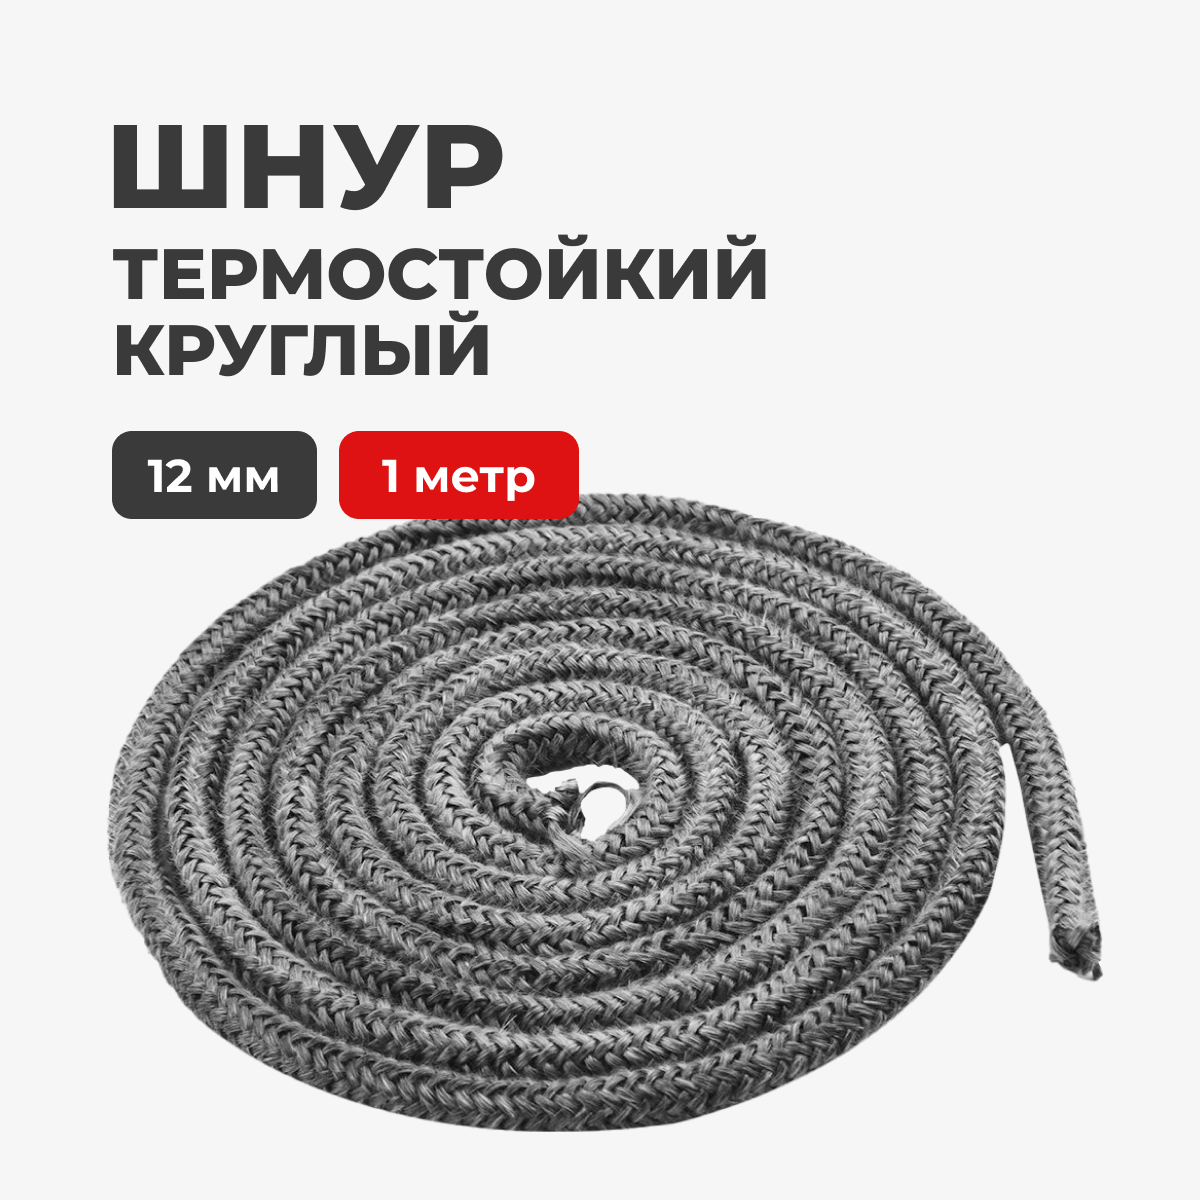 Шнур термостойкий для печей и каминов R-SAUNA круглый 12 мм. 1 метр, 24764 патрон декоративный шнур 1 метр e27 бронза